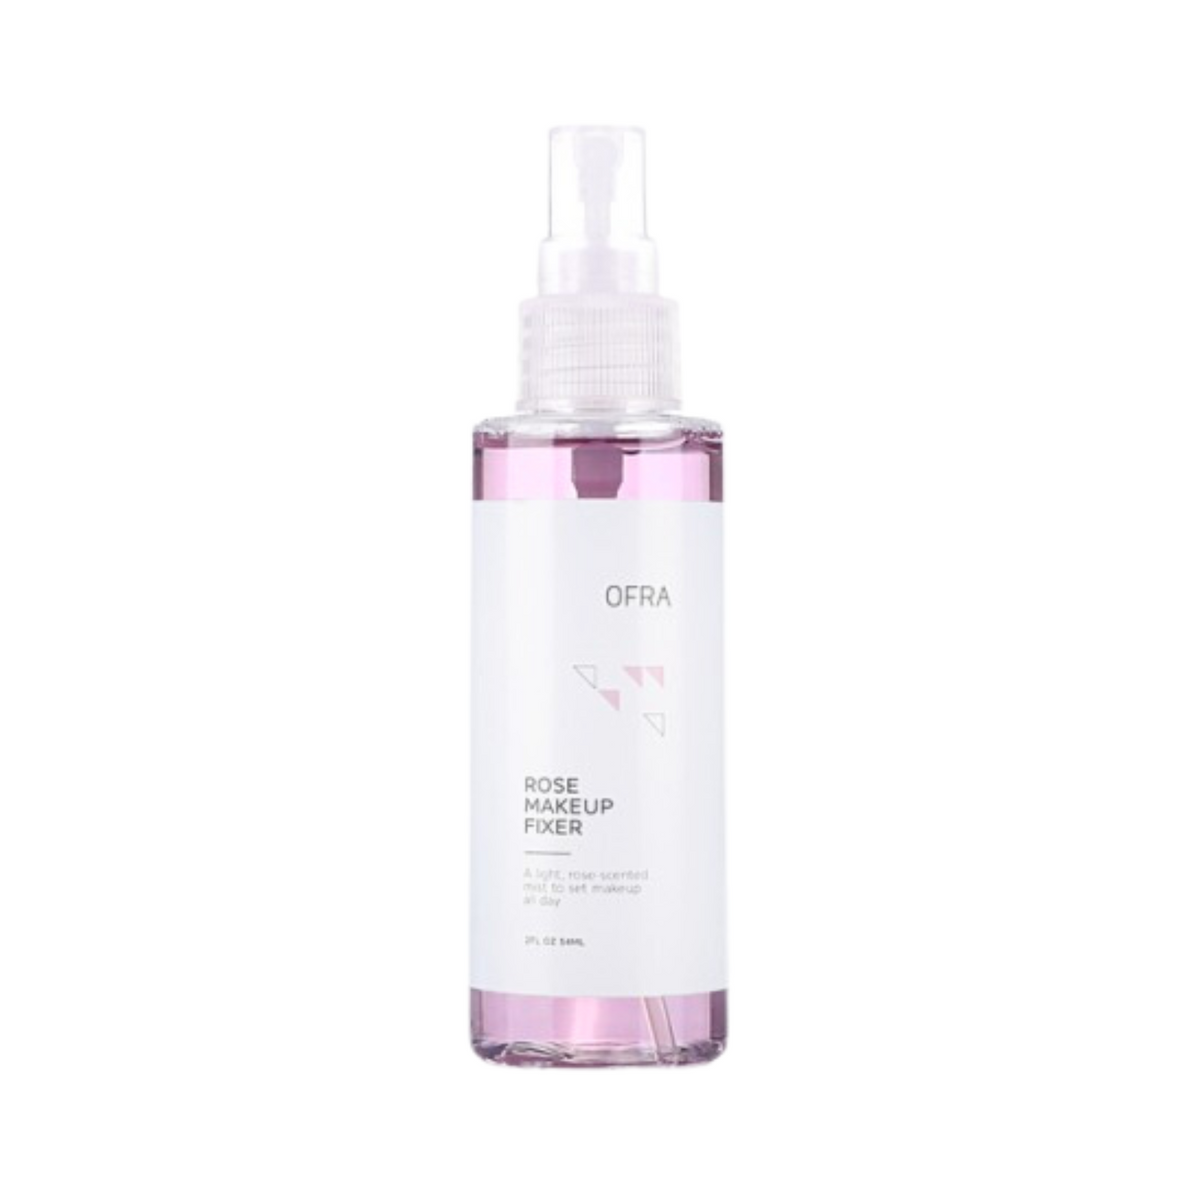 ofra-rose-makeup-fixer-setting-spray-54ml